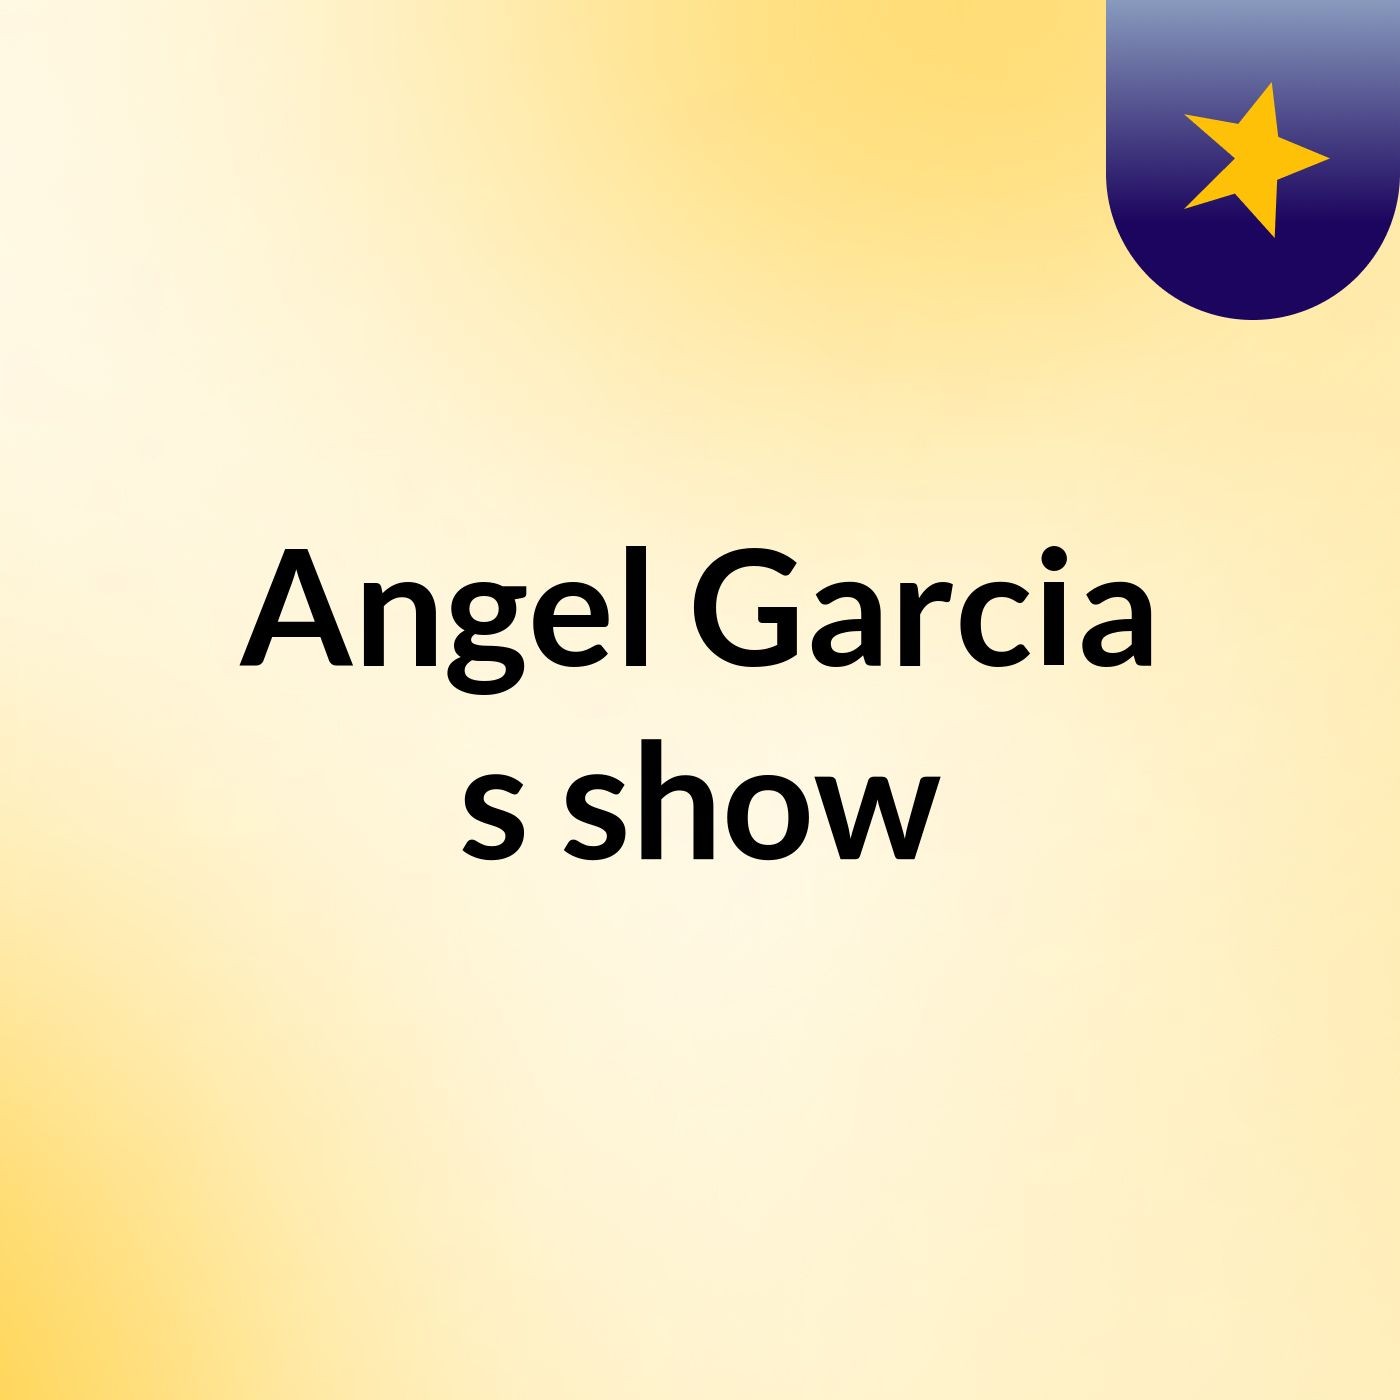 Angel Garcia's show